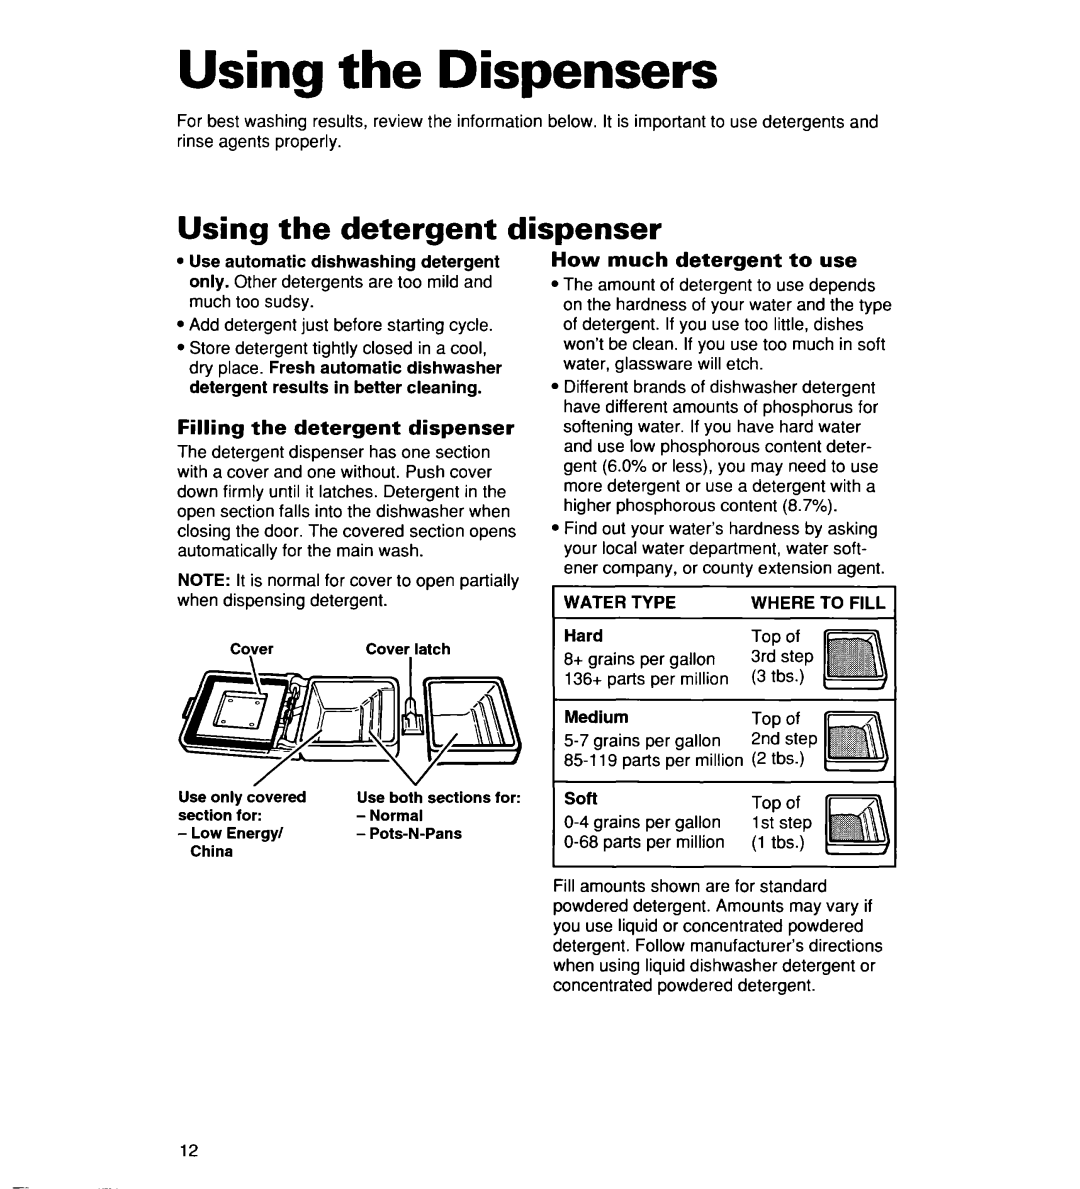 Whirlpool 935 Series Using the Dispensers, Using the detergent dispenser, Filling the detergent dispenser, Water Type 